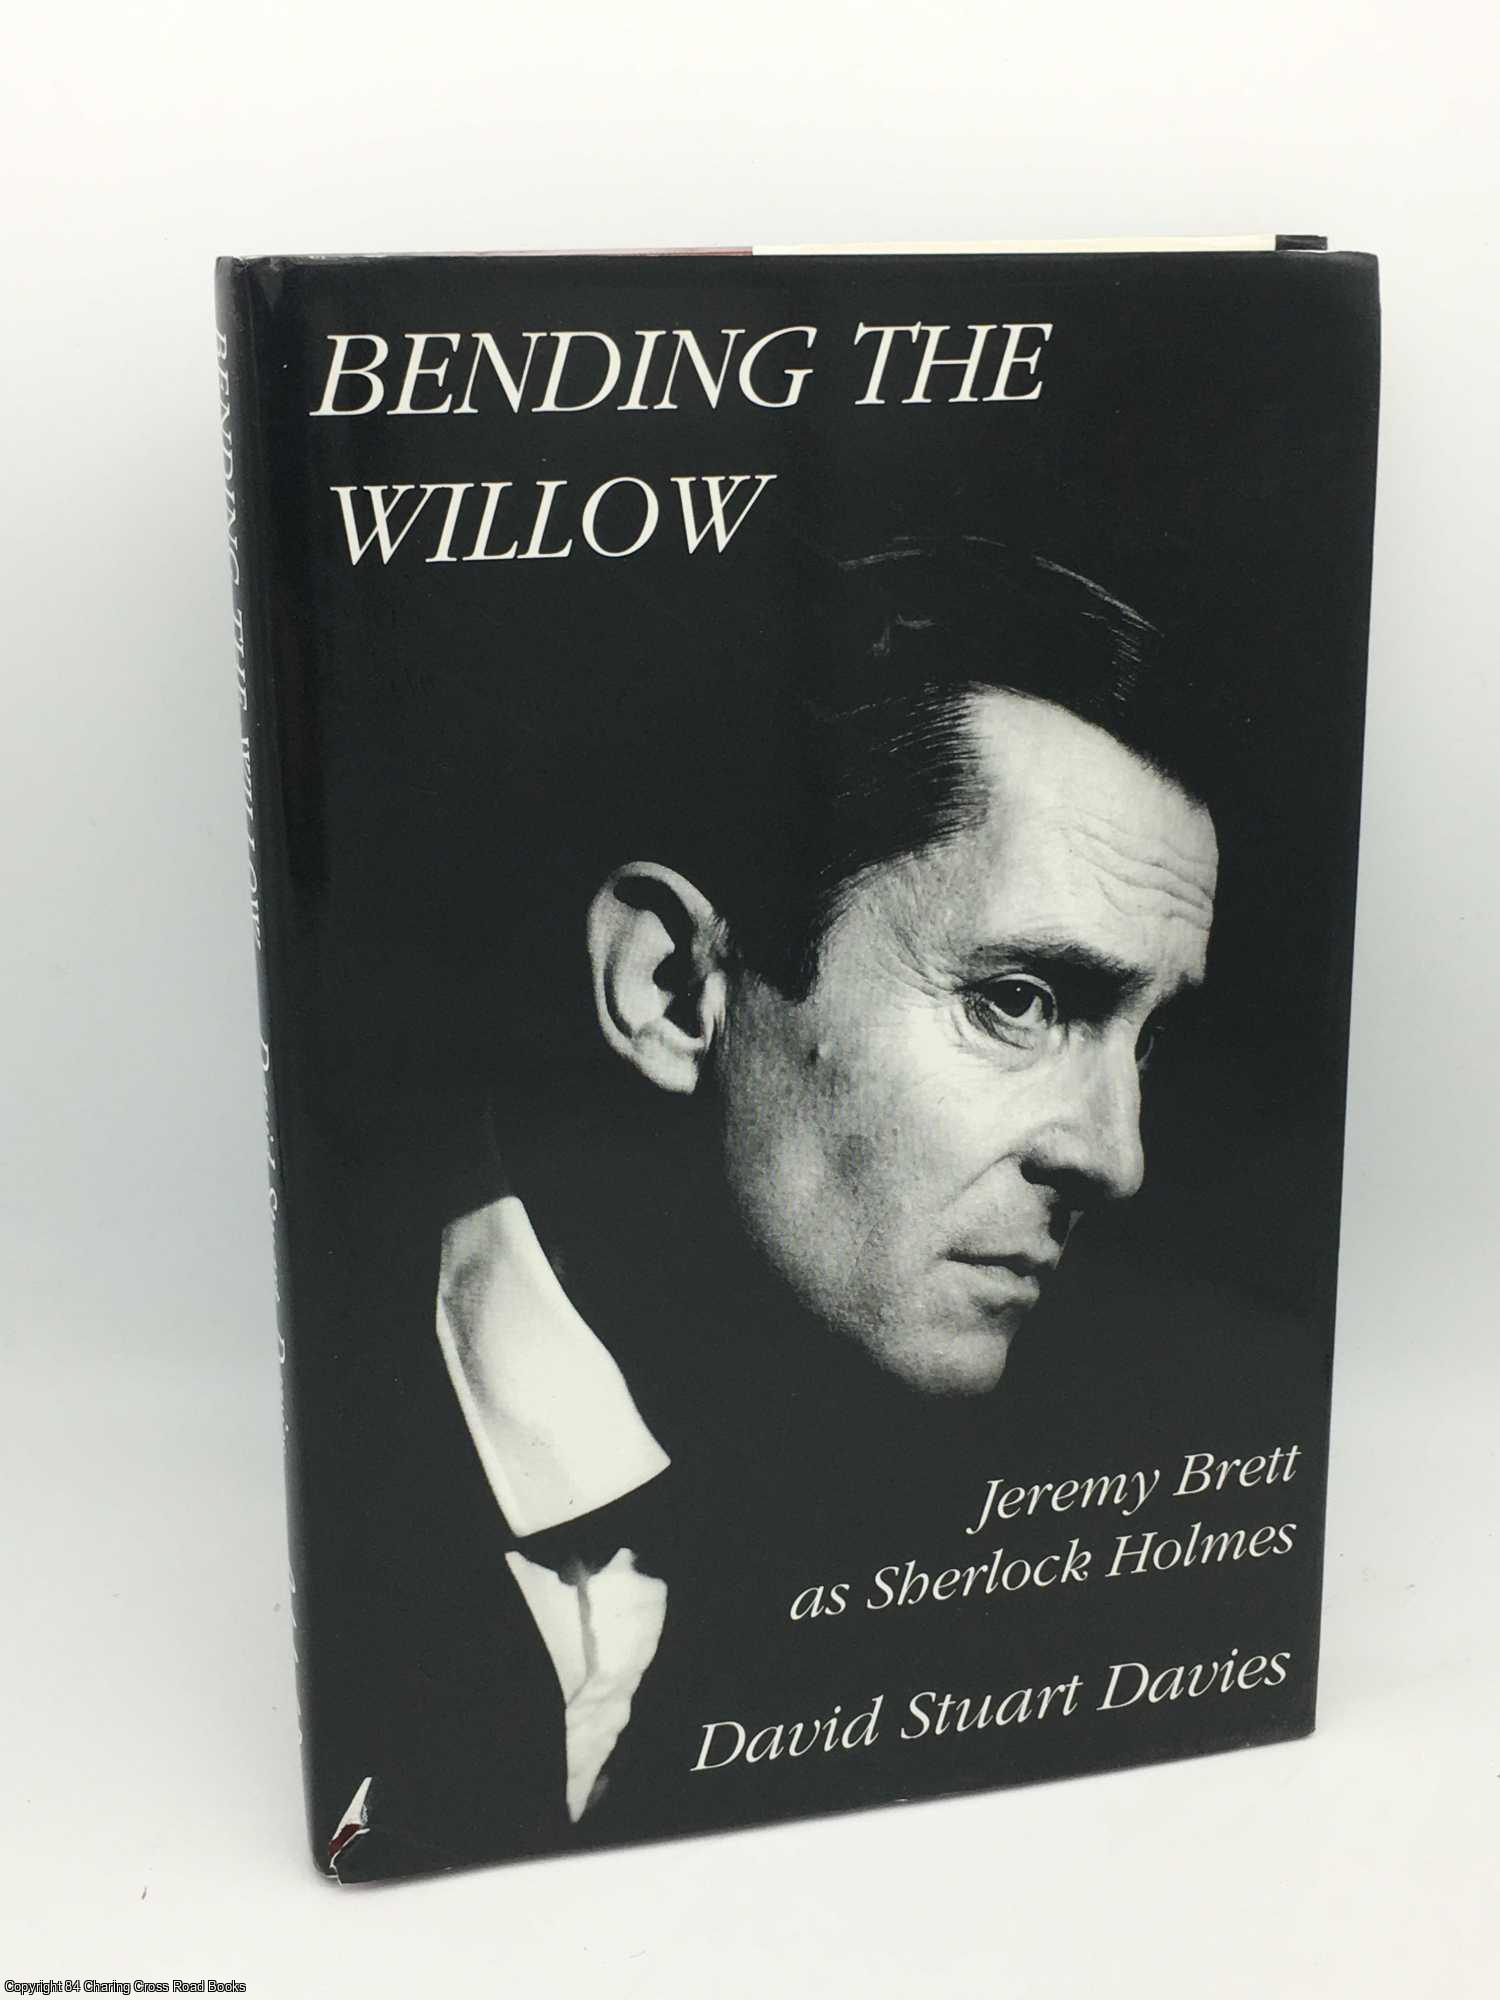 Davies, David Stuart - Bending the Willow: Jeremy Brett as Sherlock Holmes